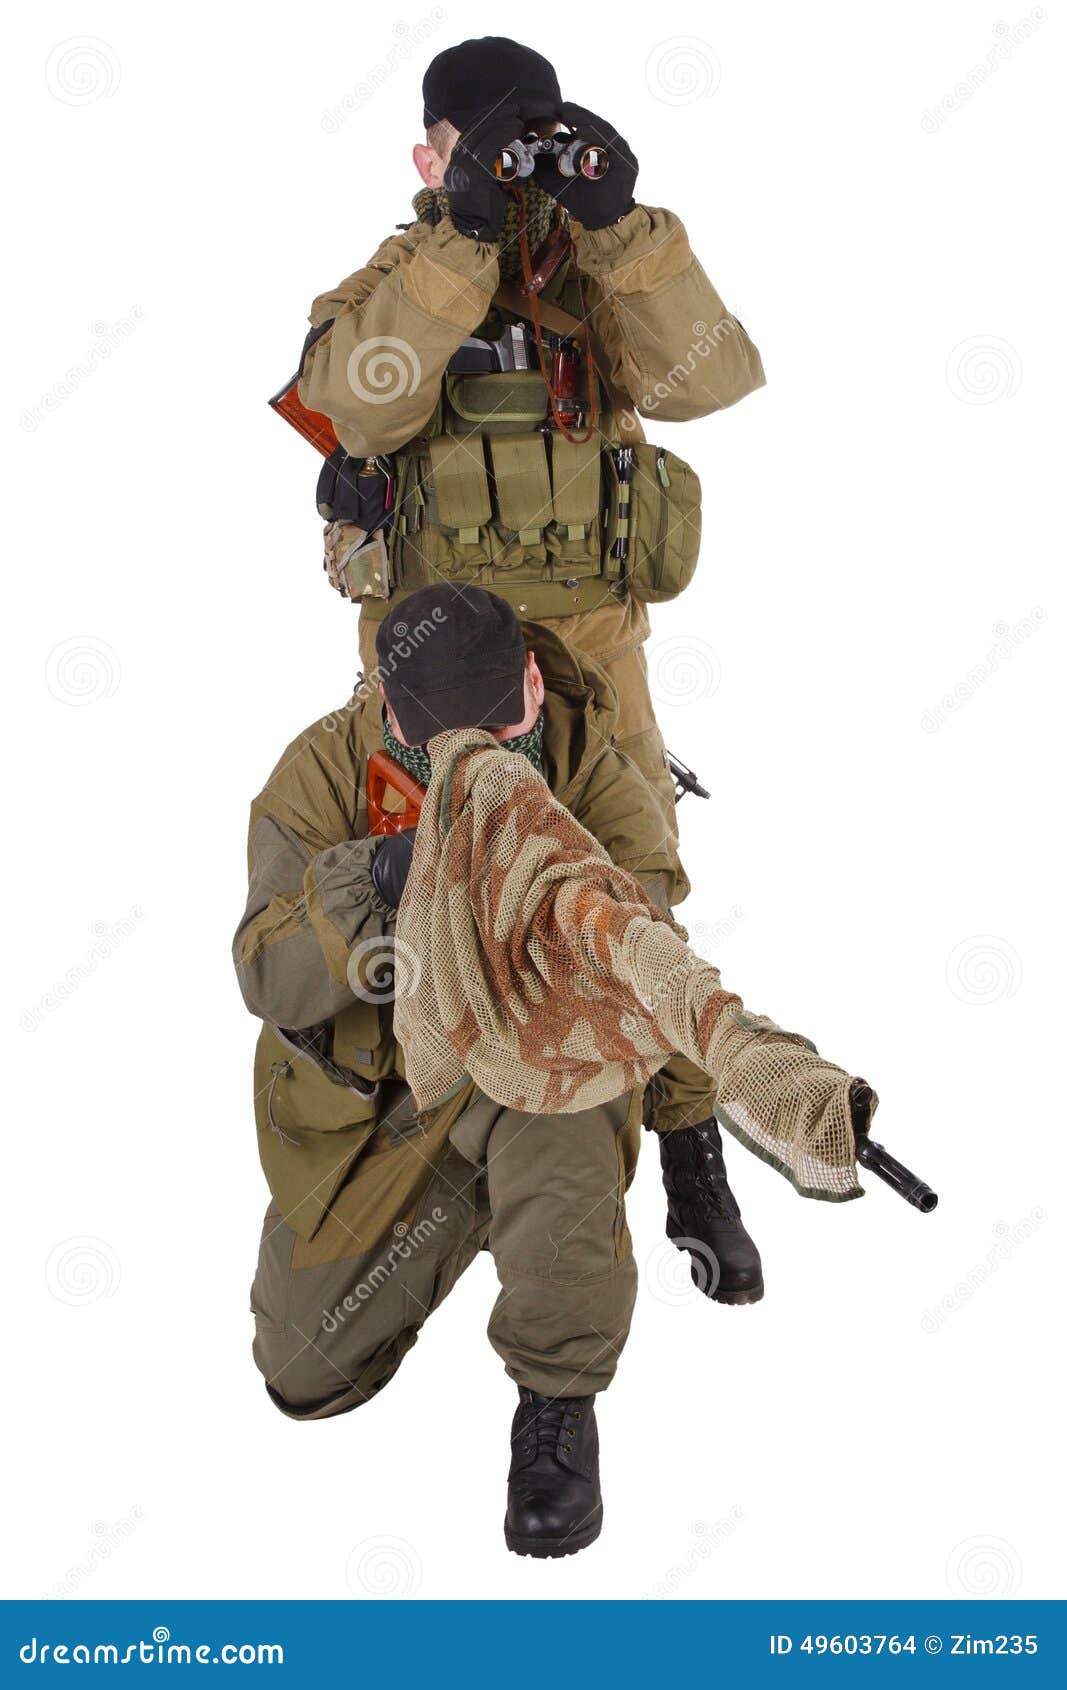 mercenaries sniper pair with svd rifle